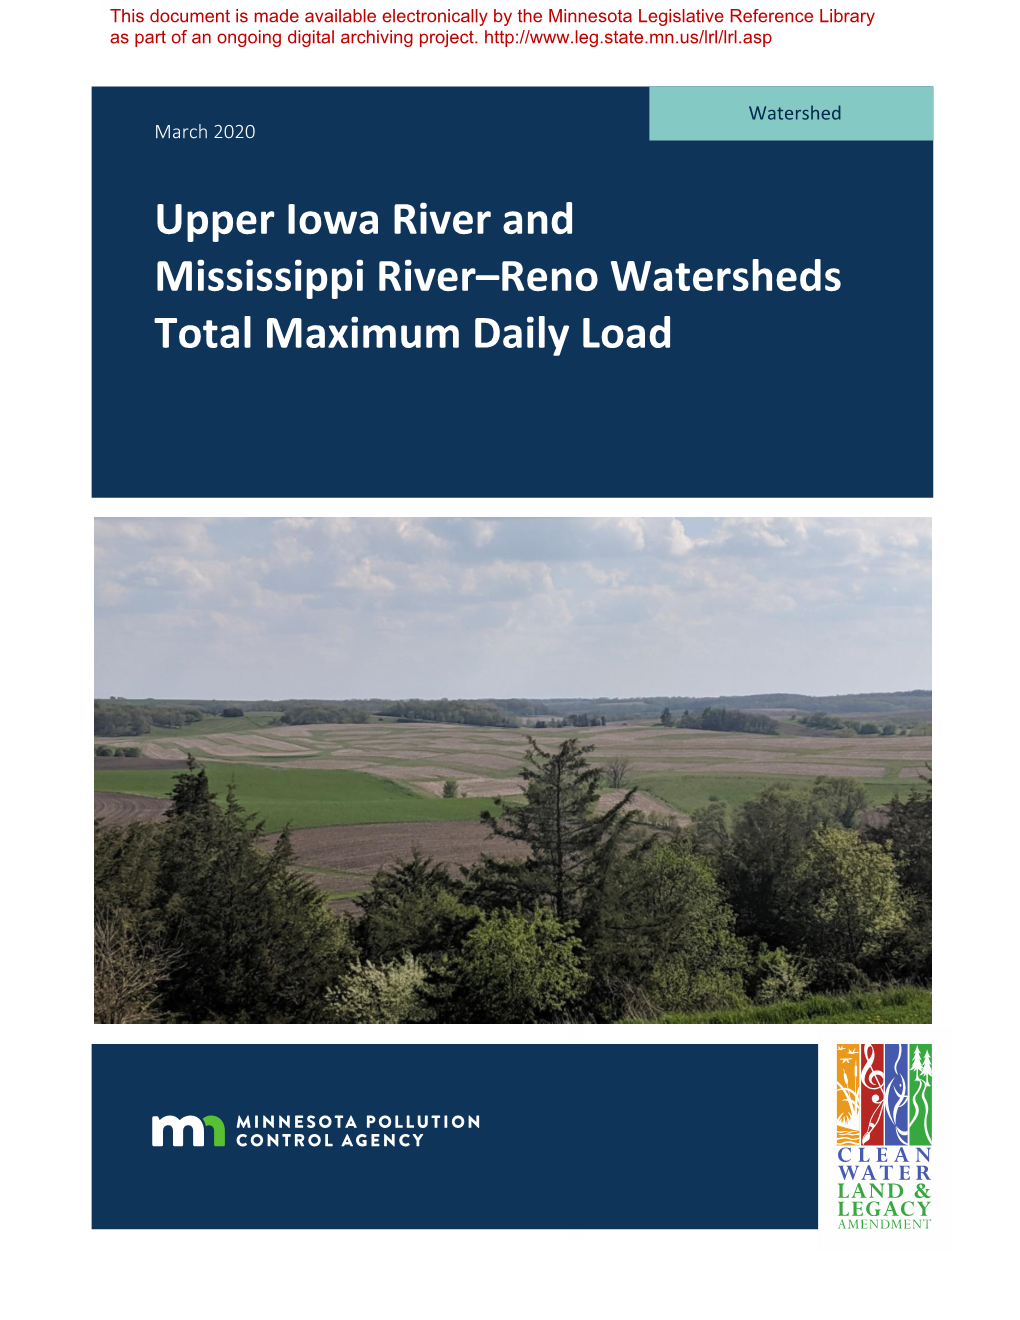 Final Upper Iowa Mississippi River-Reno Total Maximum Daily